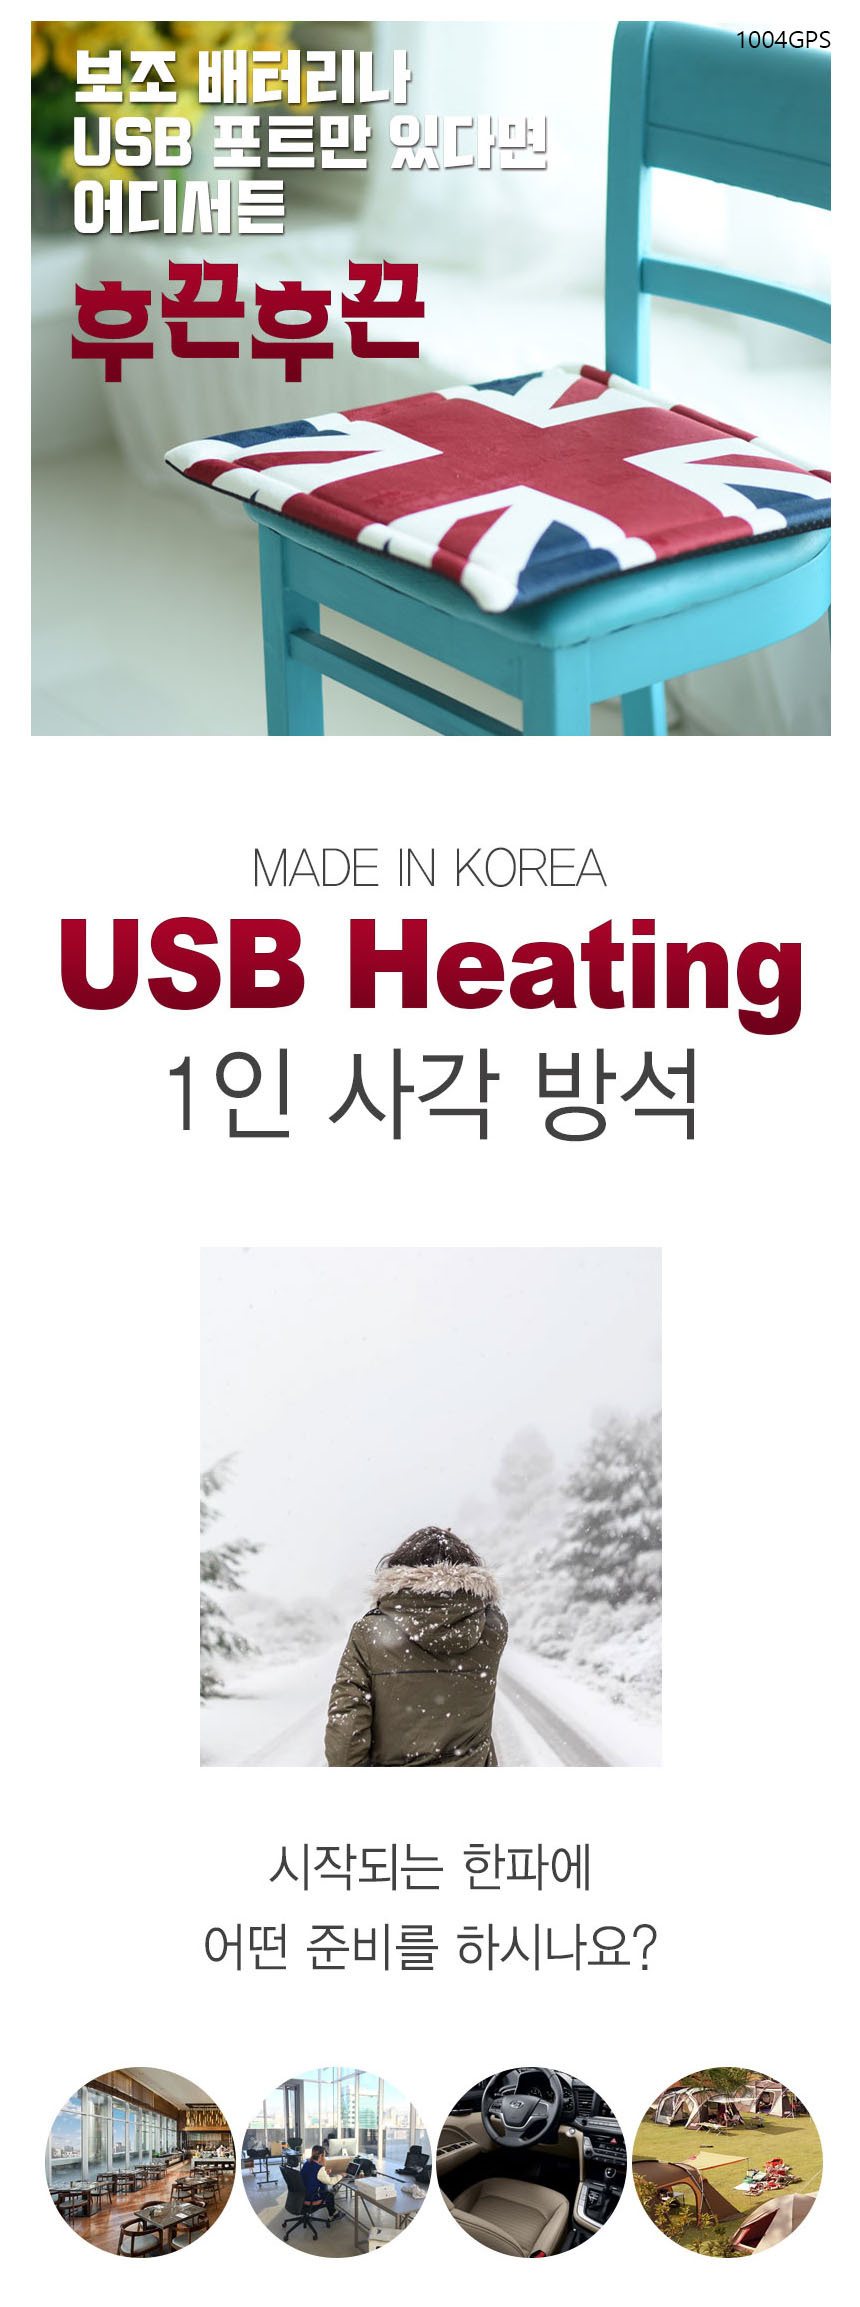 usb-heating-4gag-seat-01.jpg